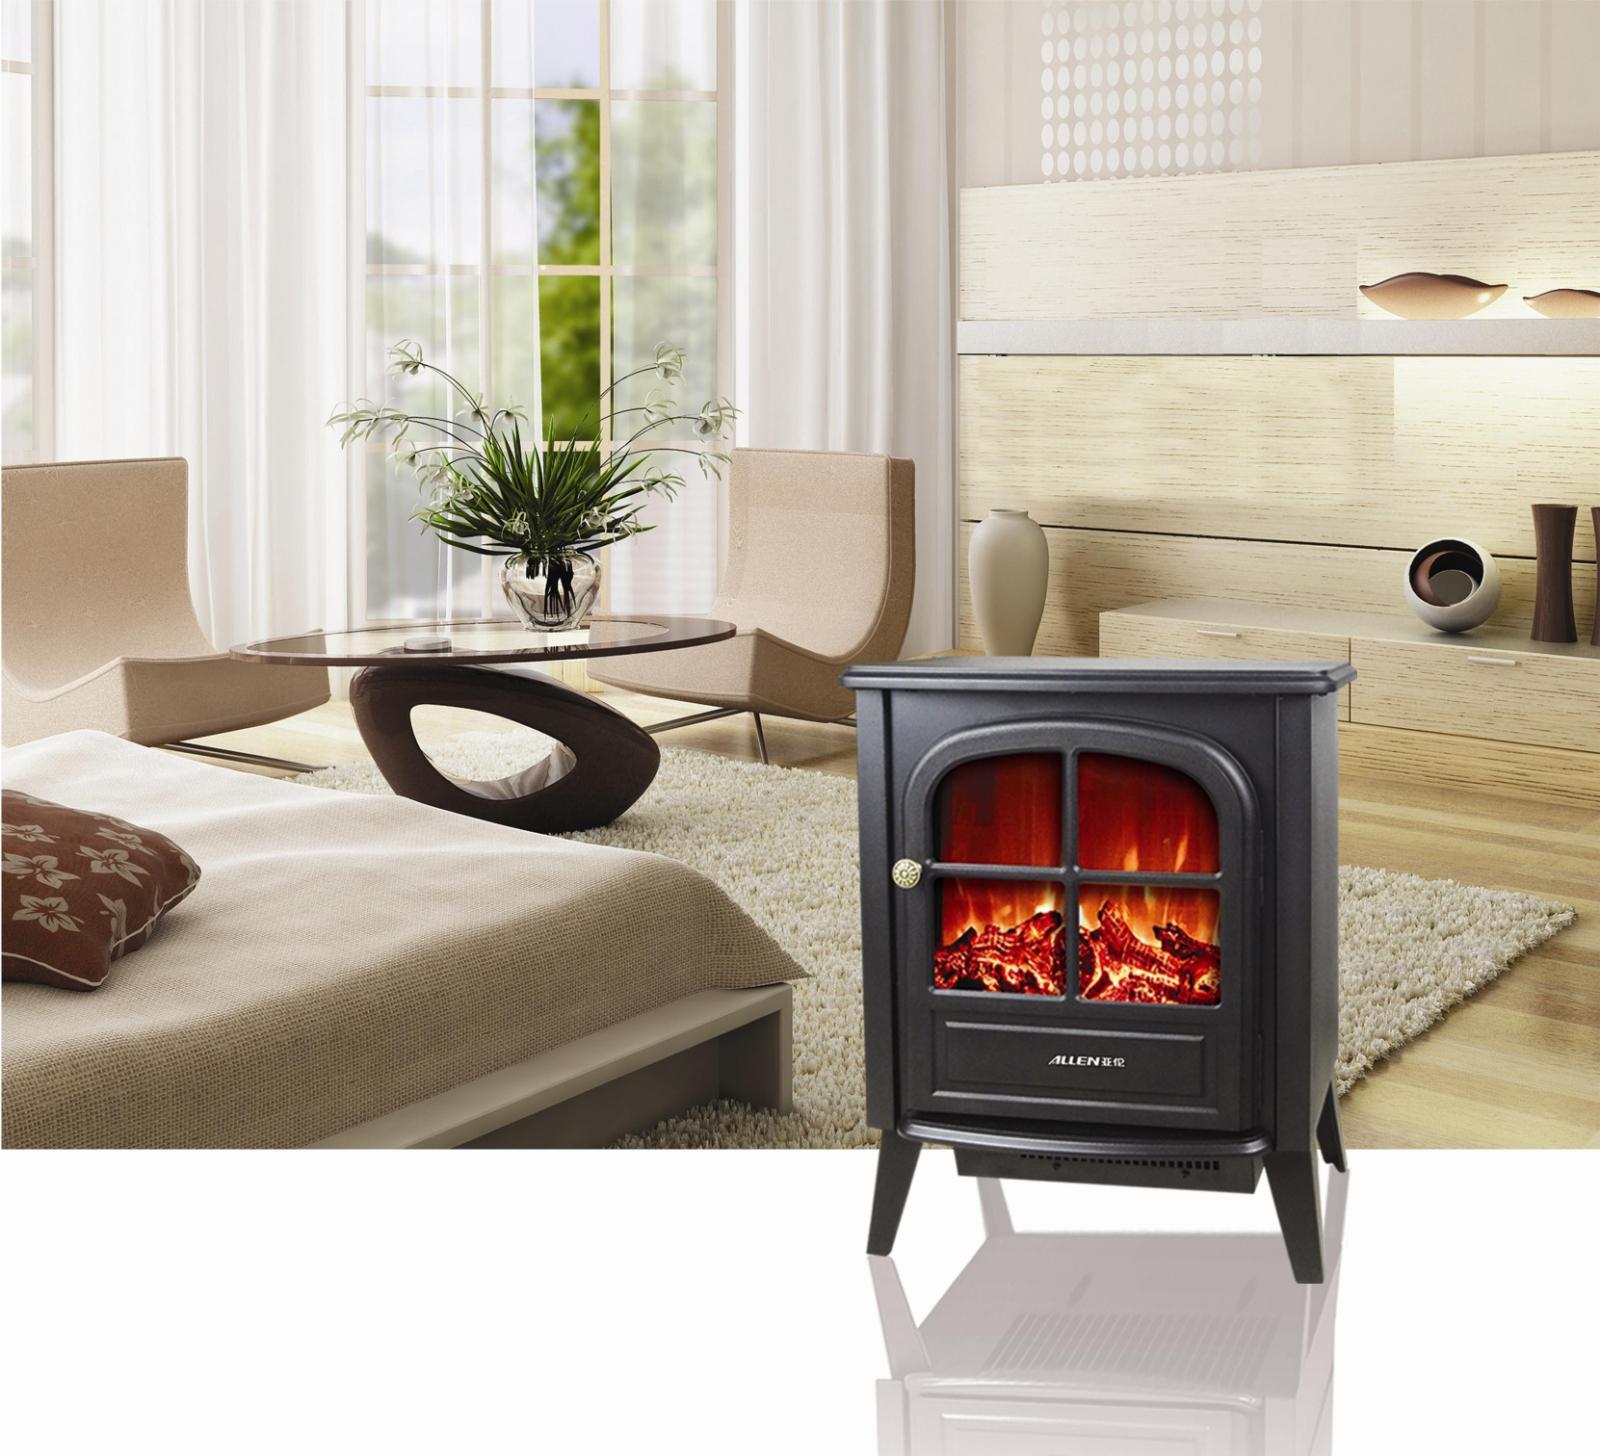 Aaron EA1105 electric fireplace heater household vertical electric heater portable electric heater16